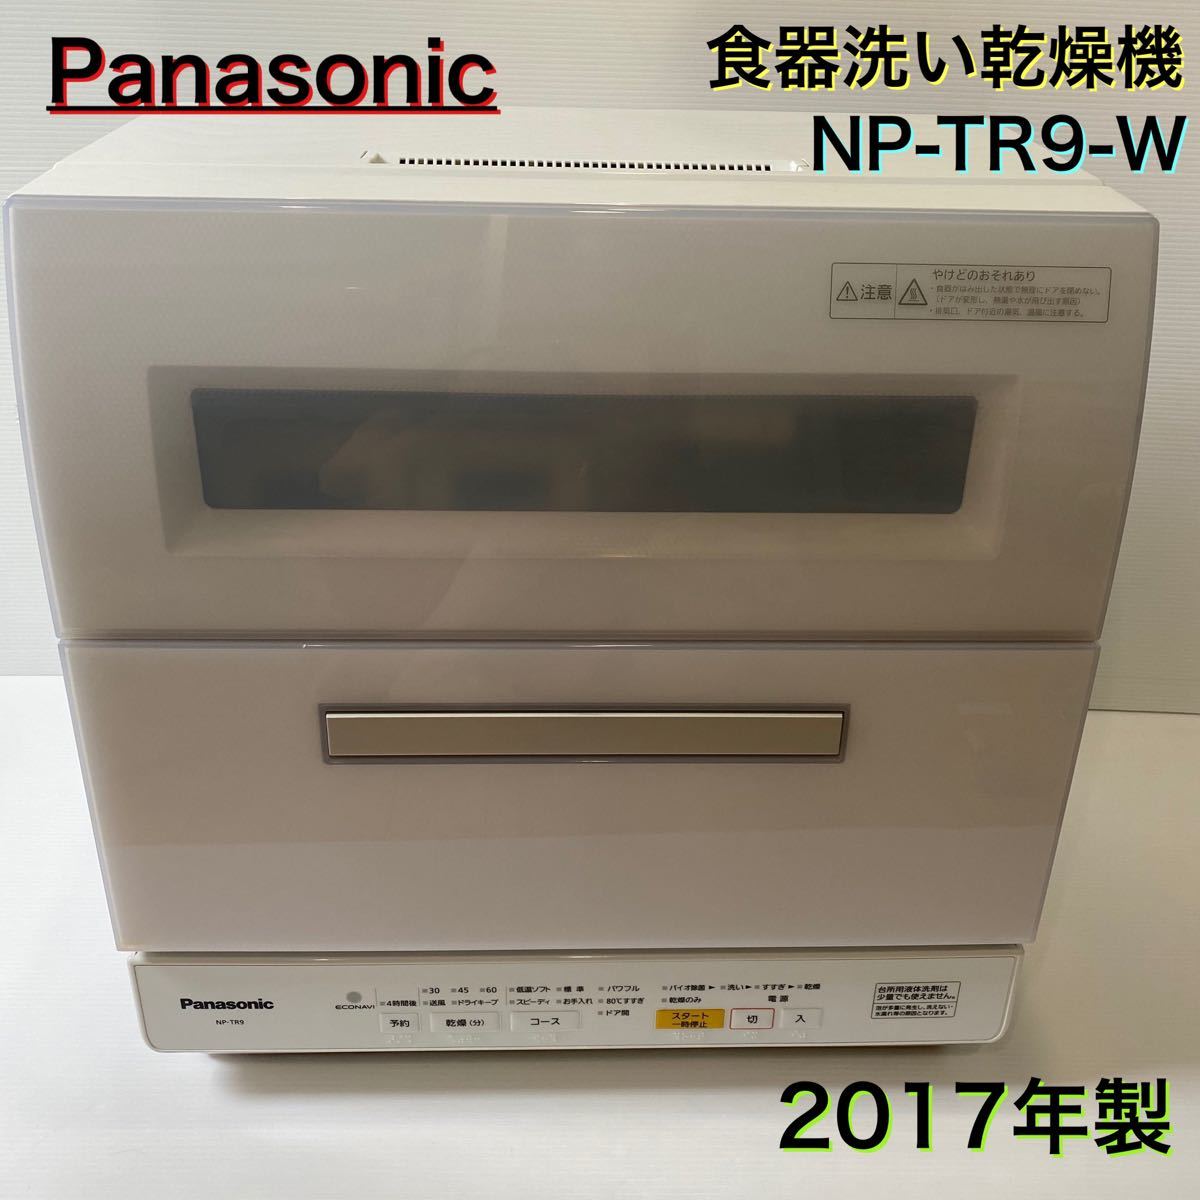 Panasonic NP-TR9-W 食器洗い乾燥機 パナソニック 食洗機 - oswalminerals.com